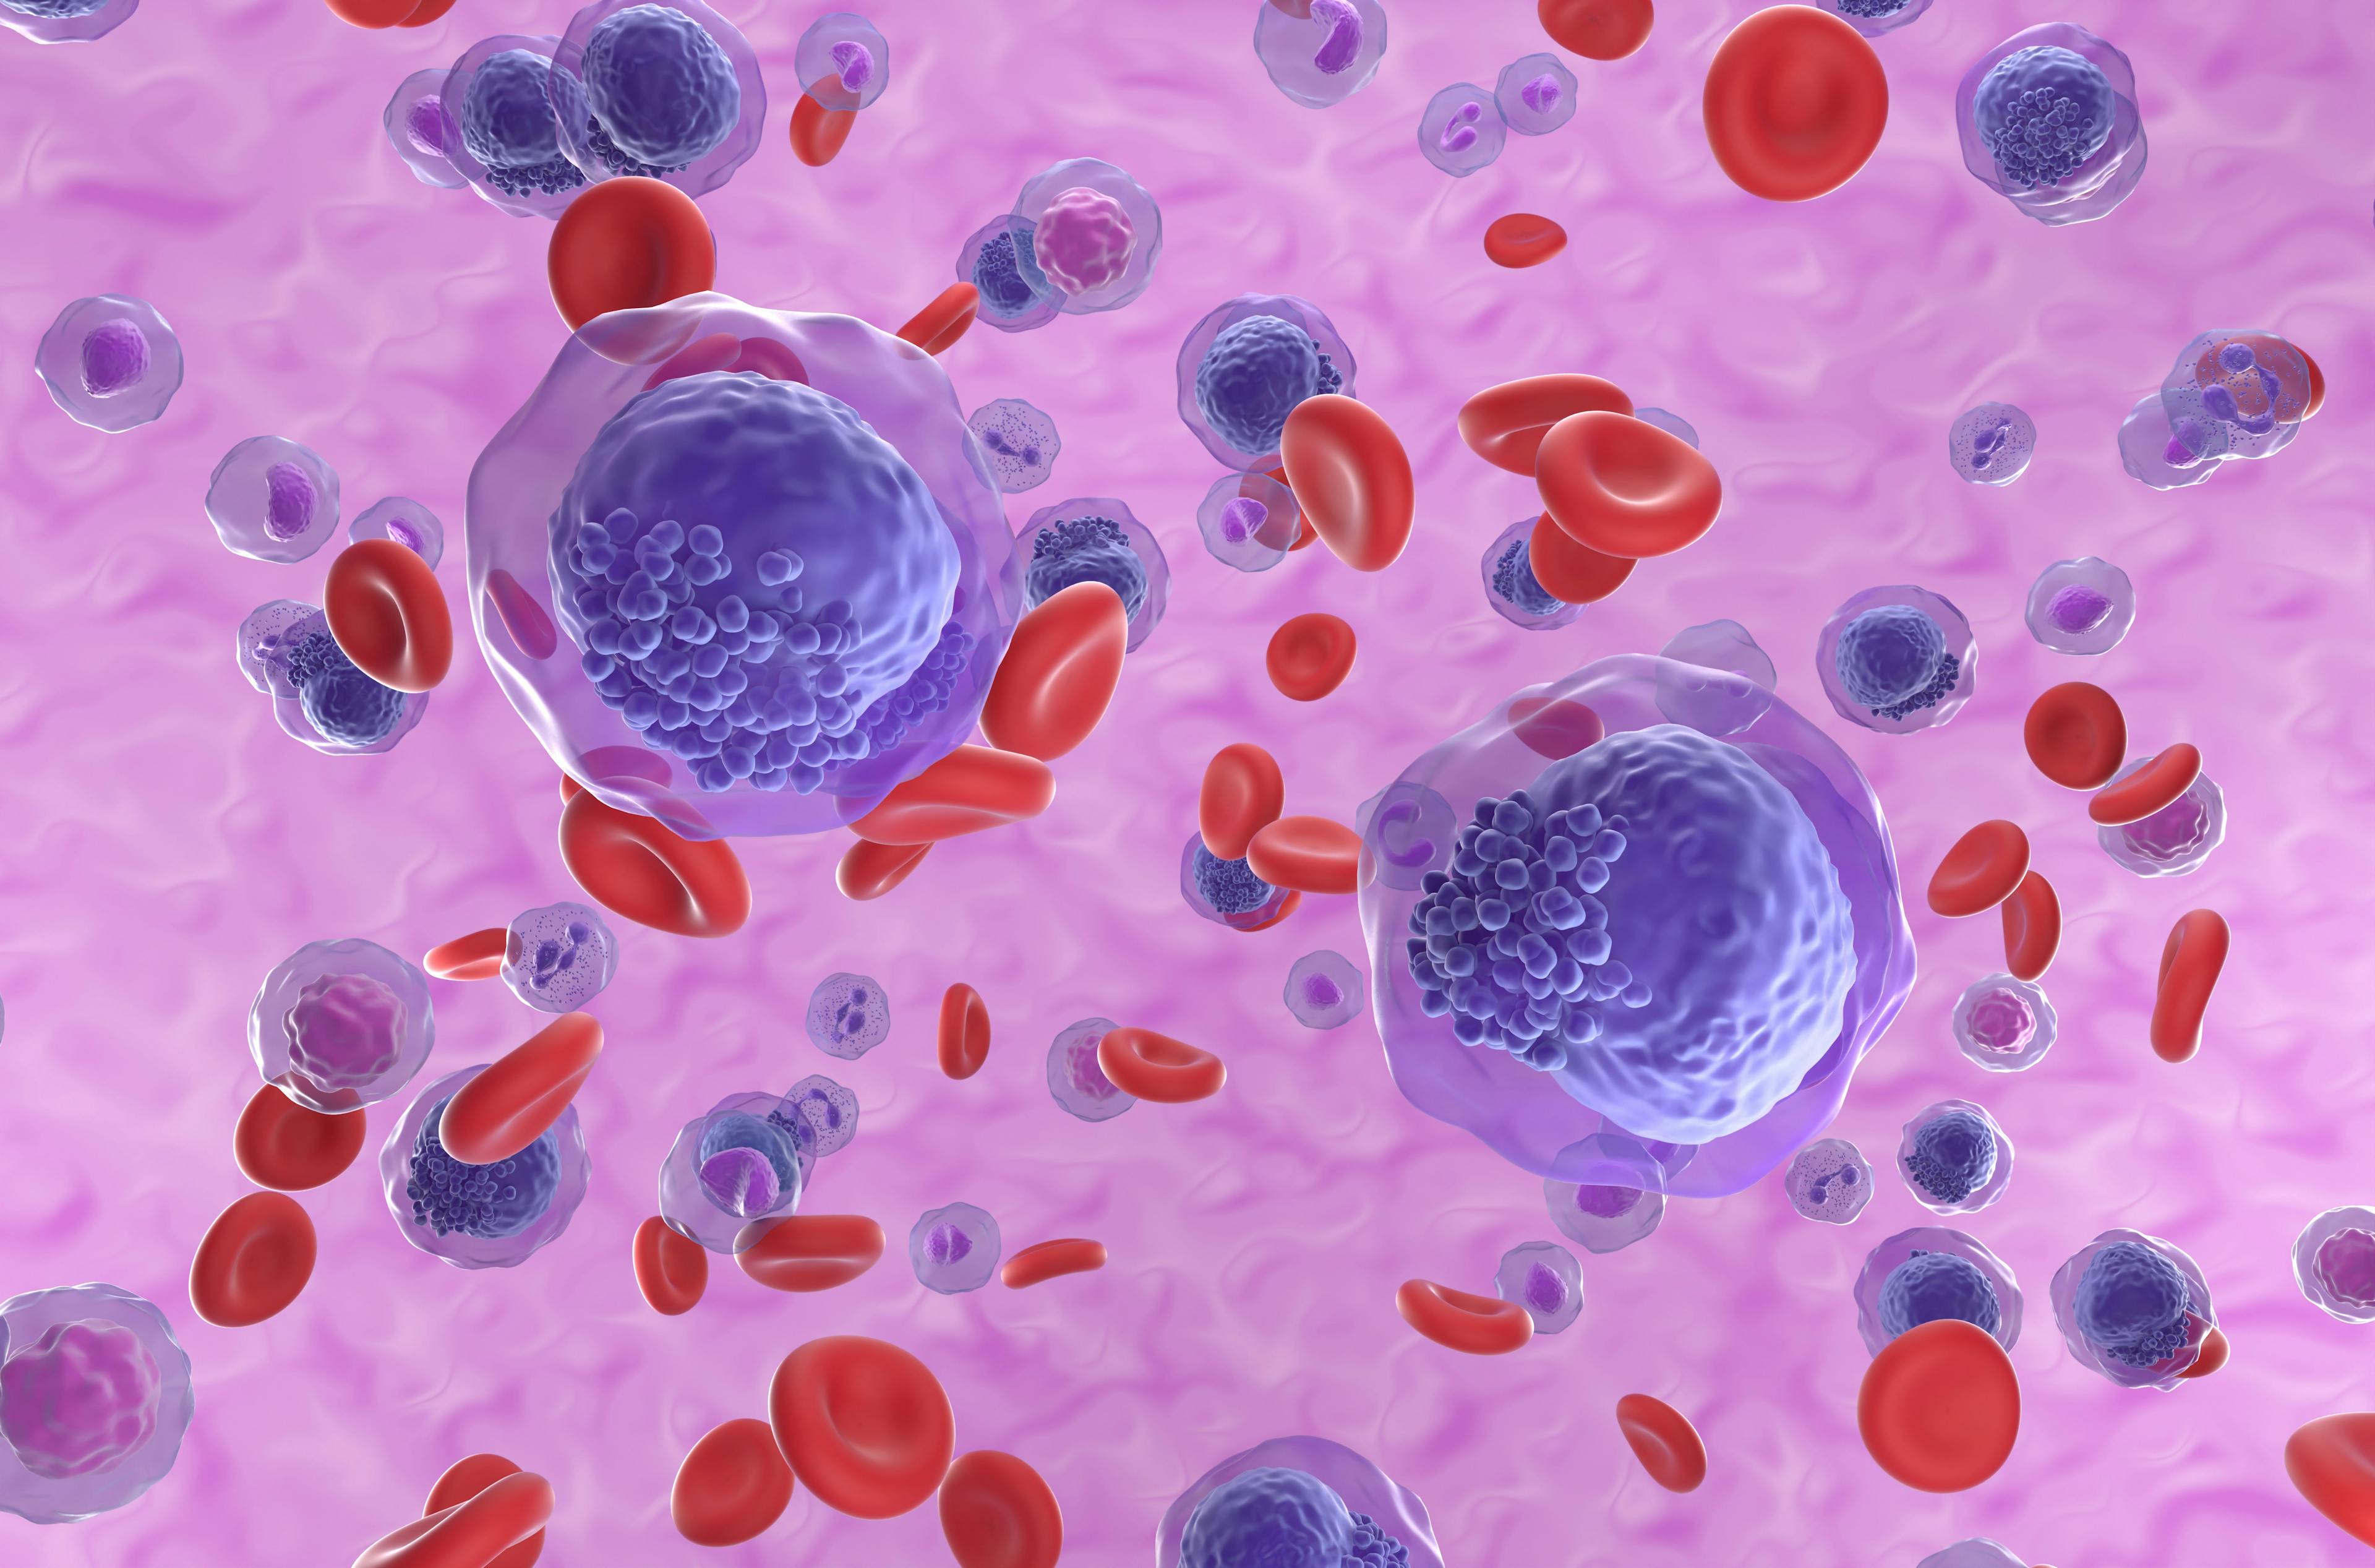 acute myeloid leukemia AML: © LASZLO - stock.adobe.com